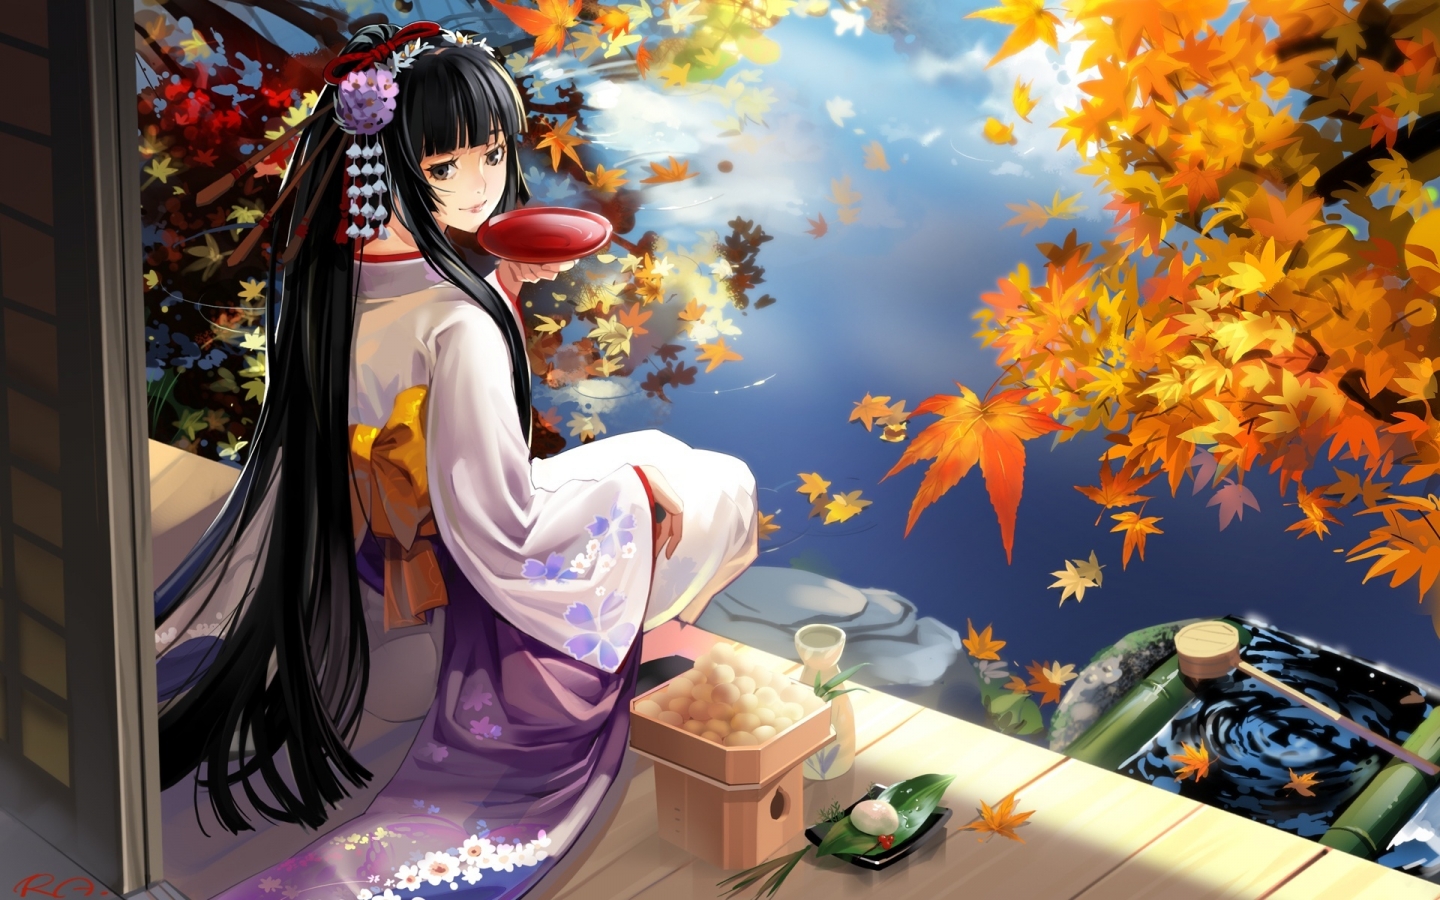 Manga Meditation for 1440 x 900 widescreen resolution